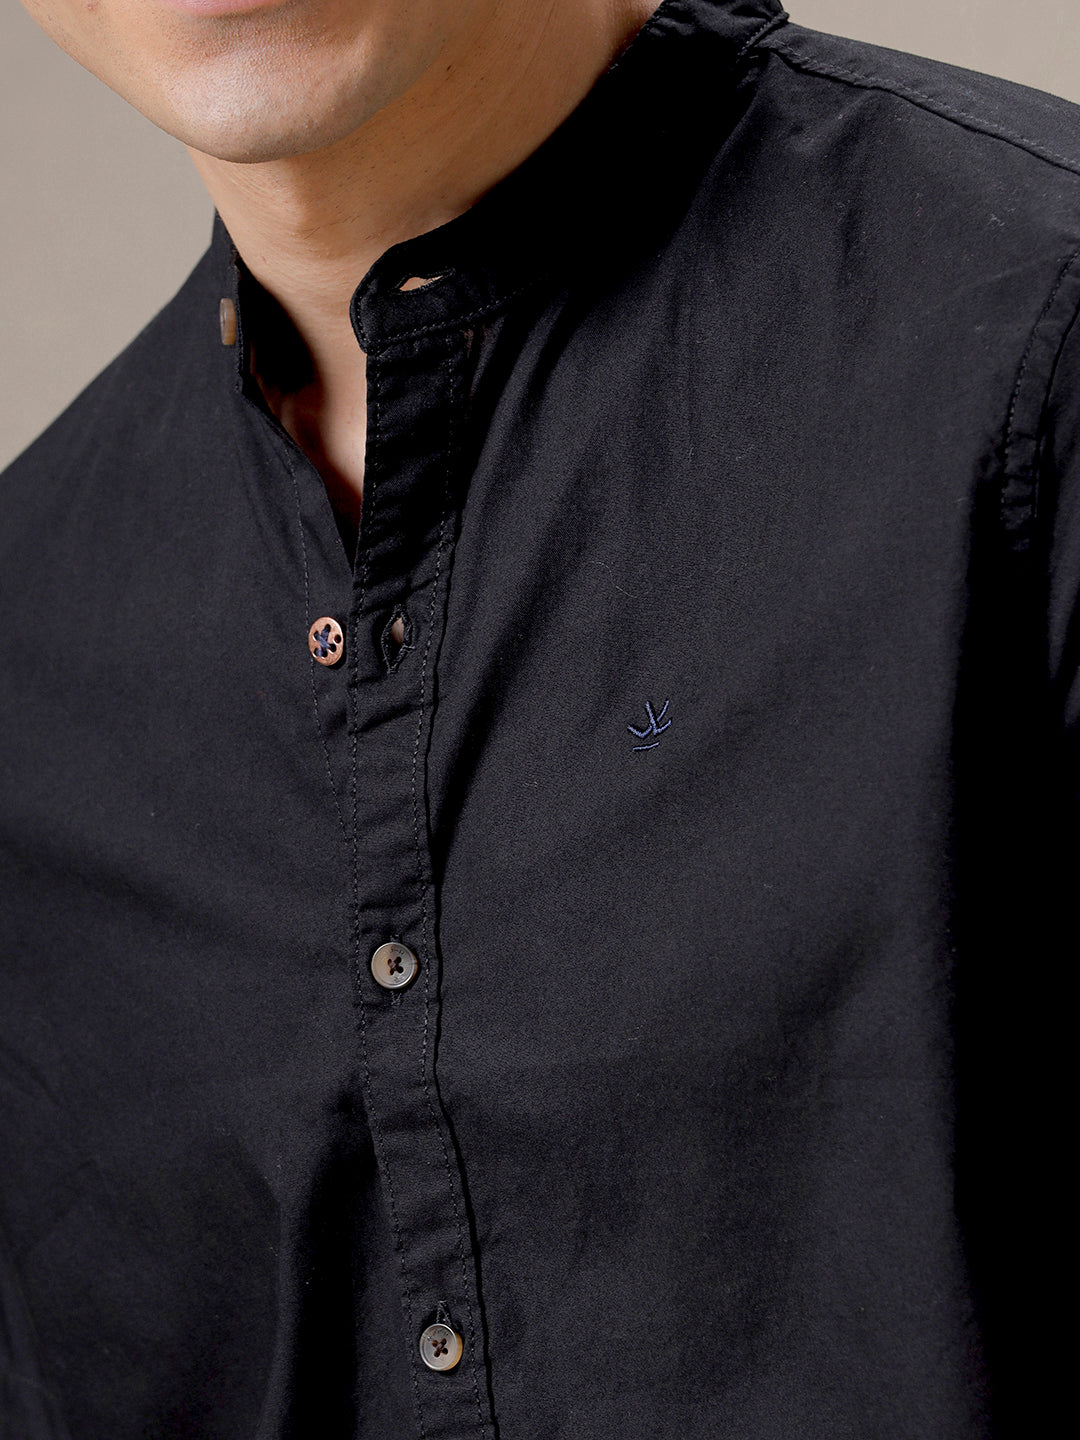 Mandarin Collar Bold Black Shirt